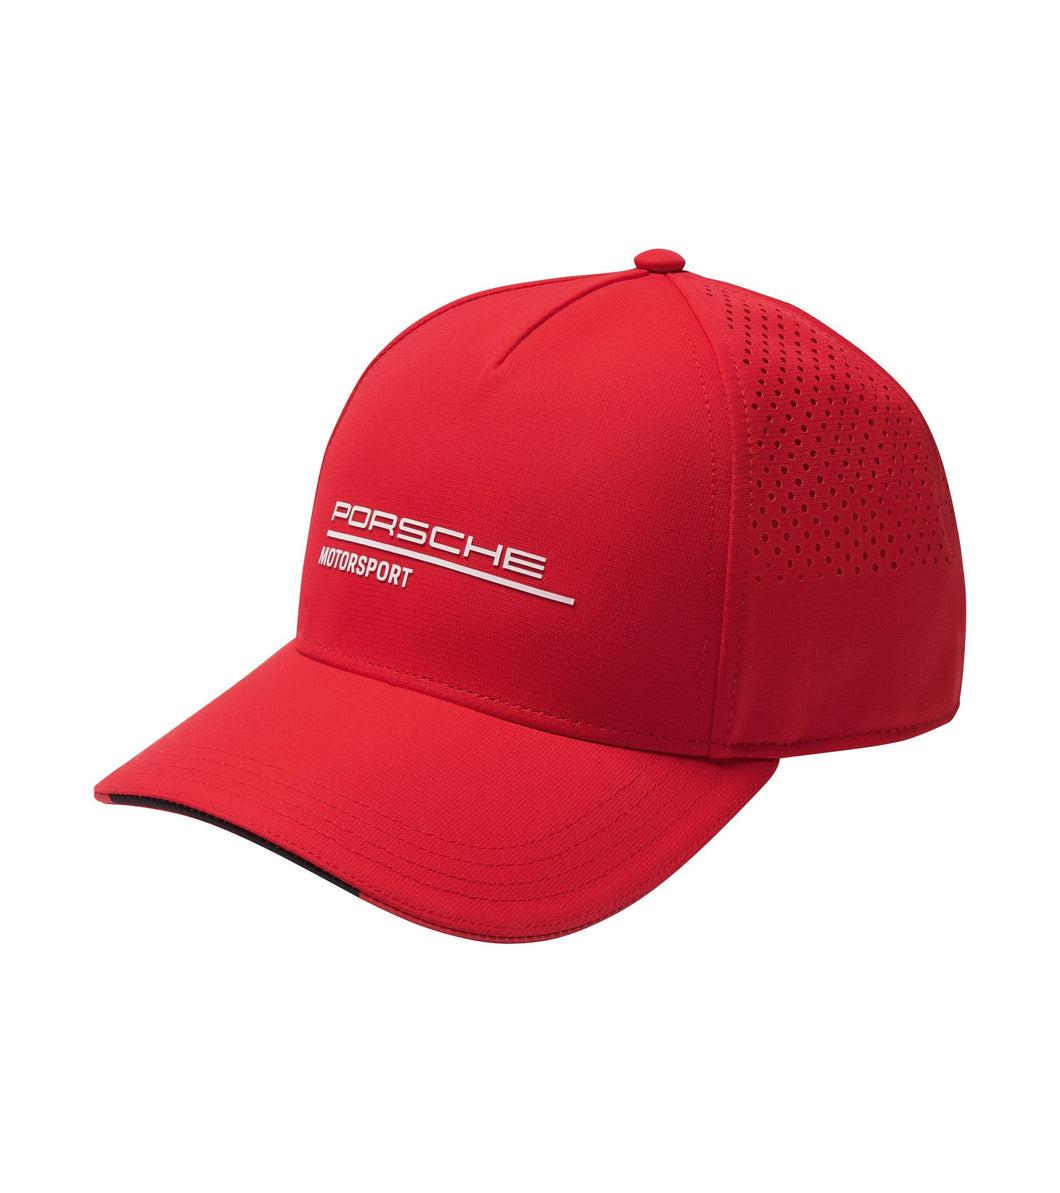 Baseball cap – Motorsport Fanwear